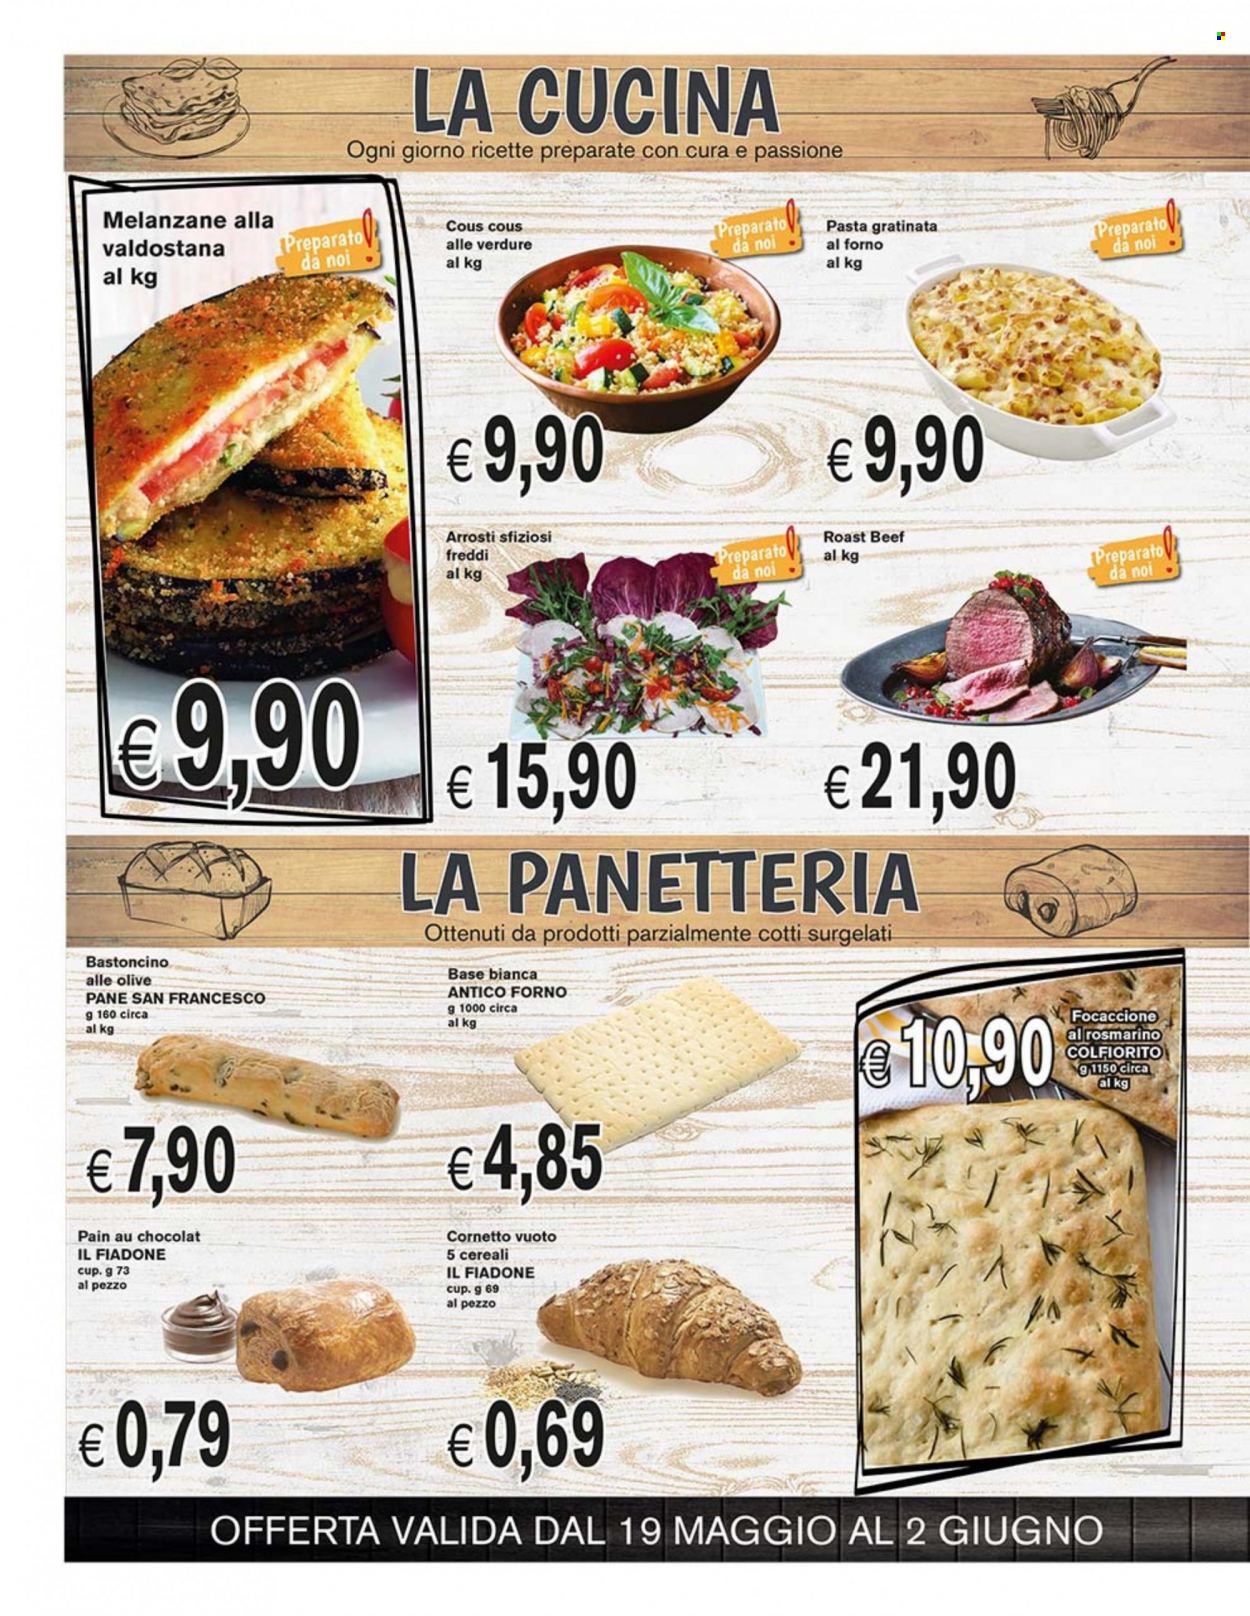 thumbnail - Volantino COAL - 19/5/2022 - 2/6/2022 - Prodotti in offerta - pane, croissant, Cornetto, roastbeef, cous cous, cereali, pasta. Pagina 6.